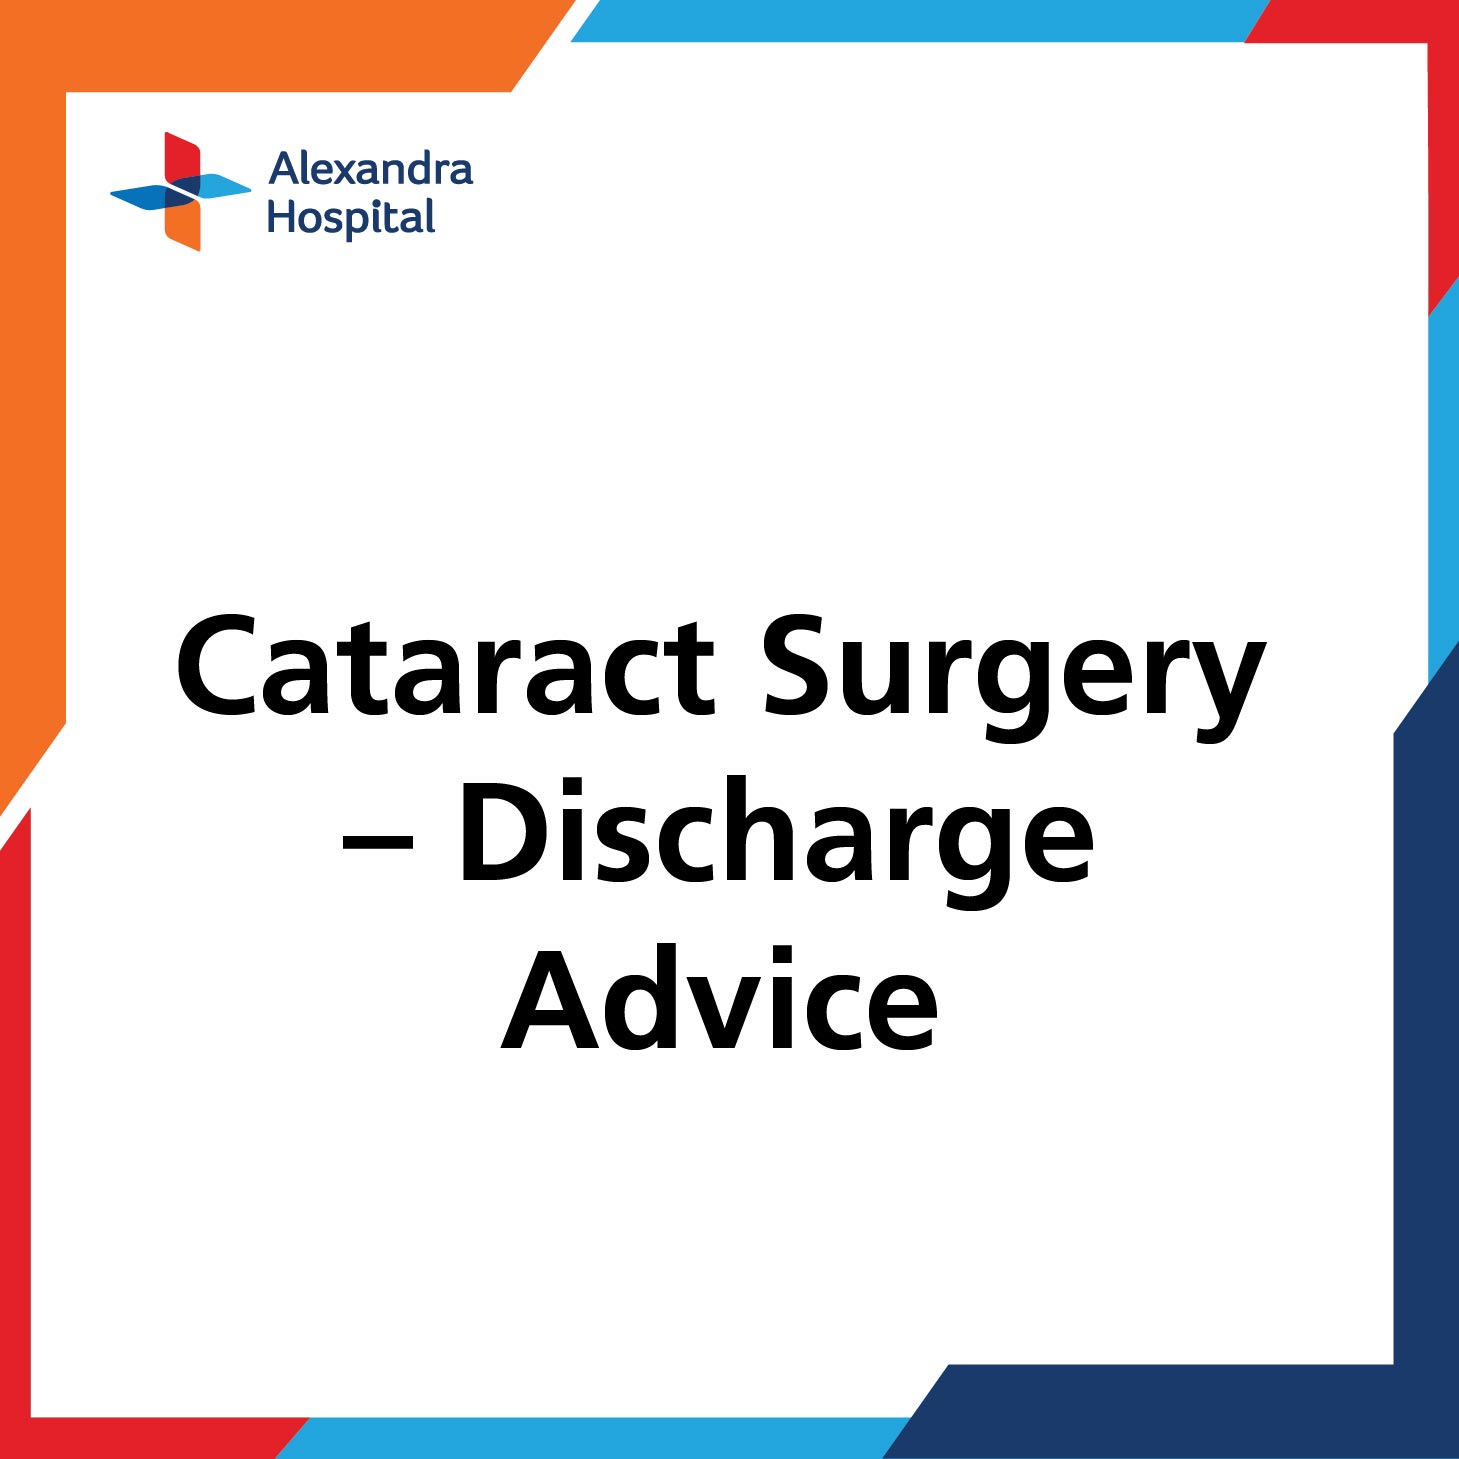 Cataract Surgery Discharge Advice